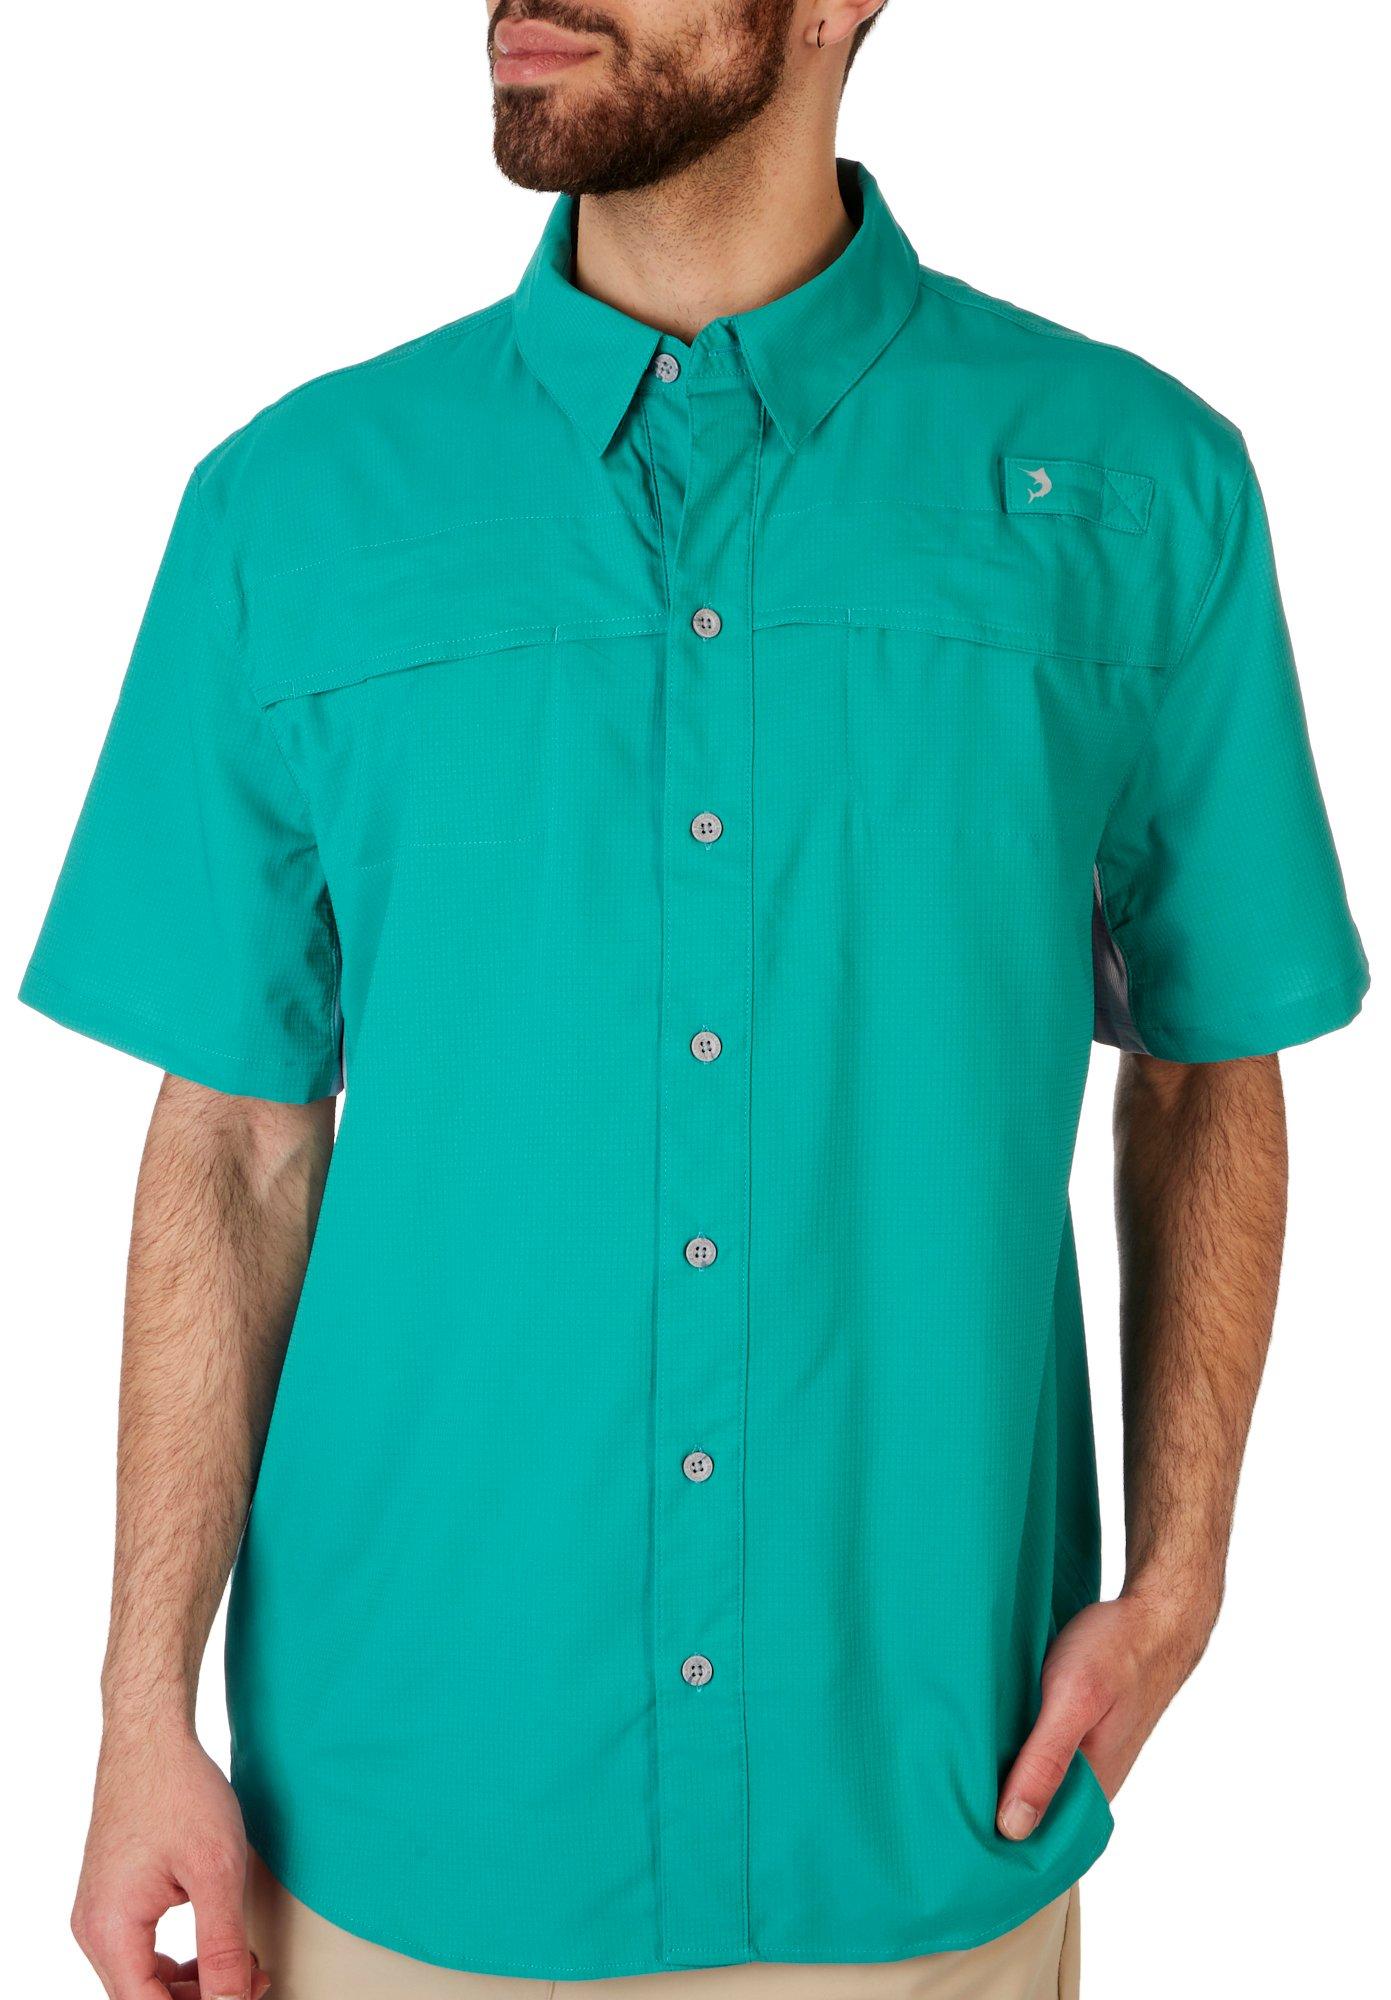 Reel Legends Mens Solid Mariner II Short Sleeve Shirt - Jade Green - Large